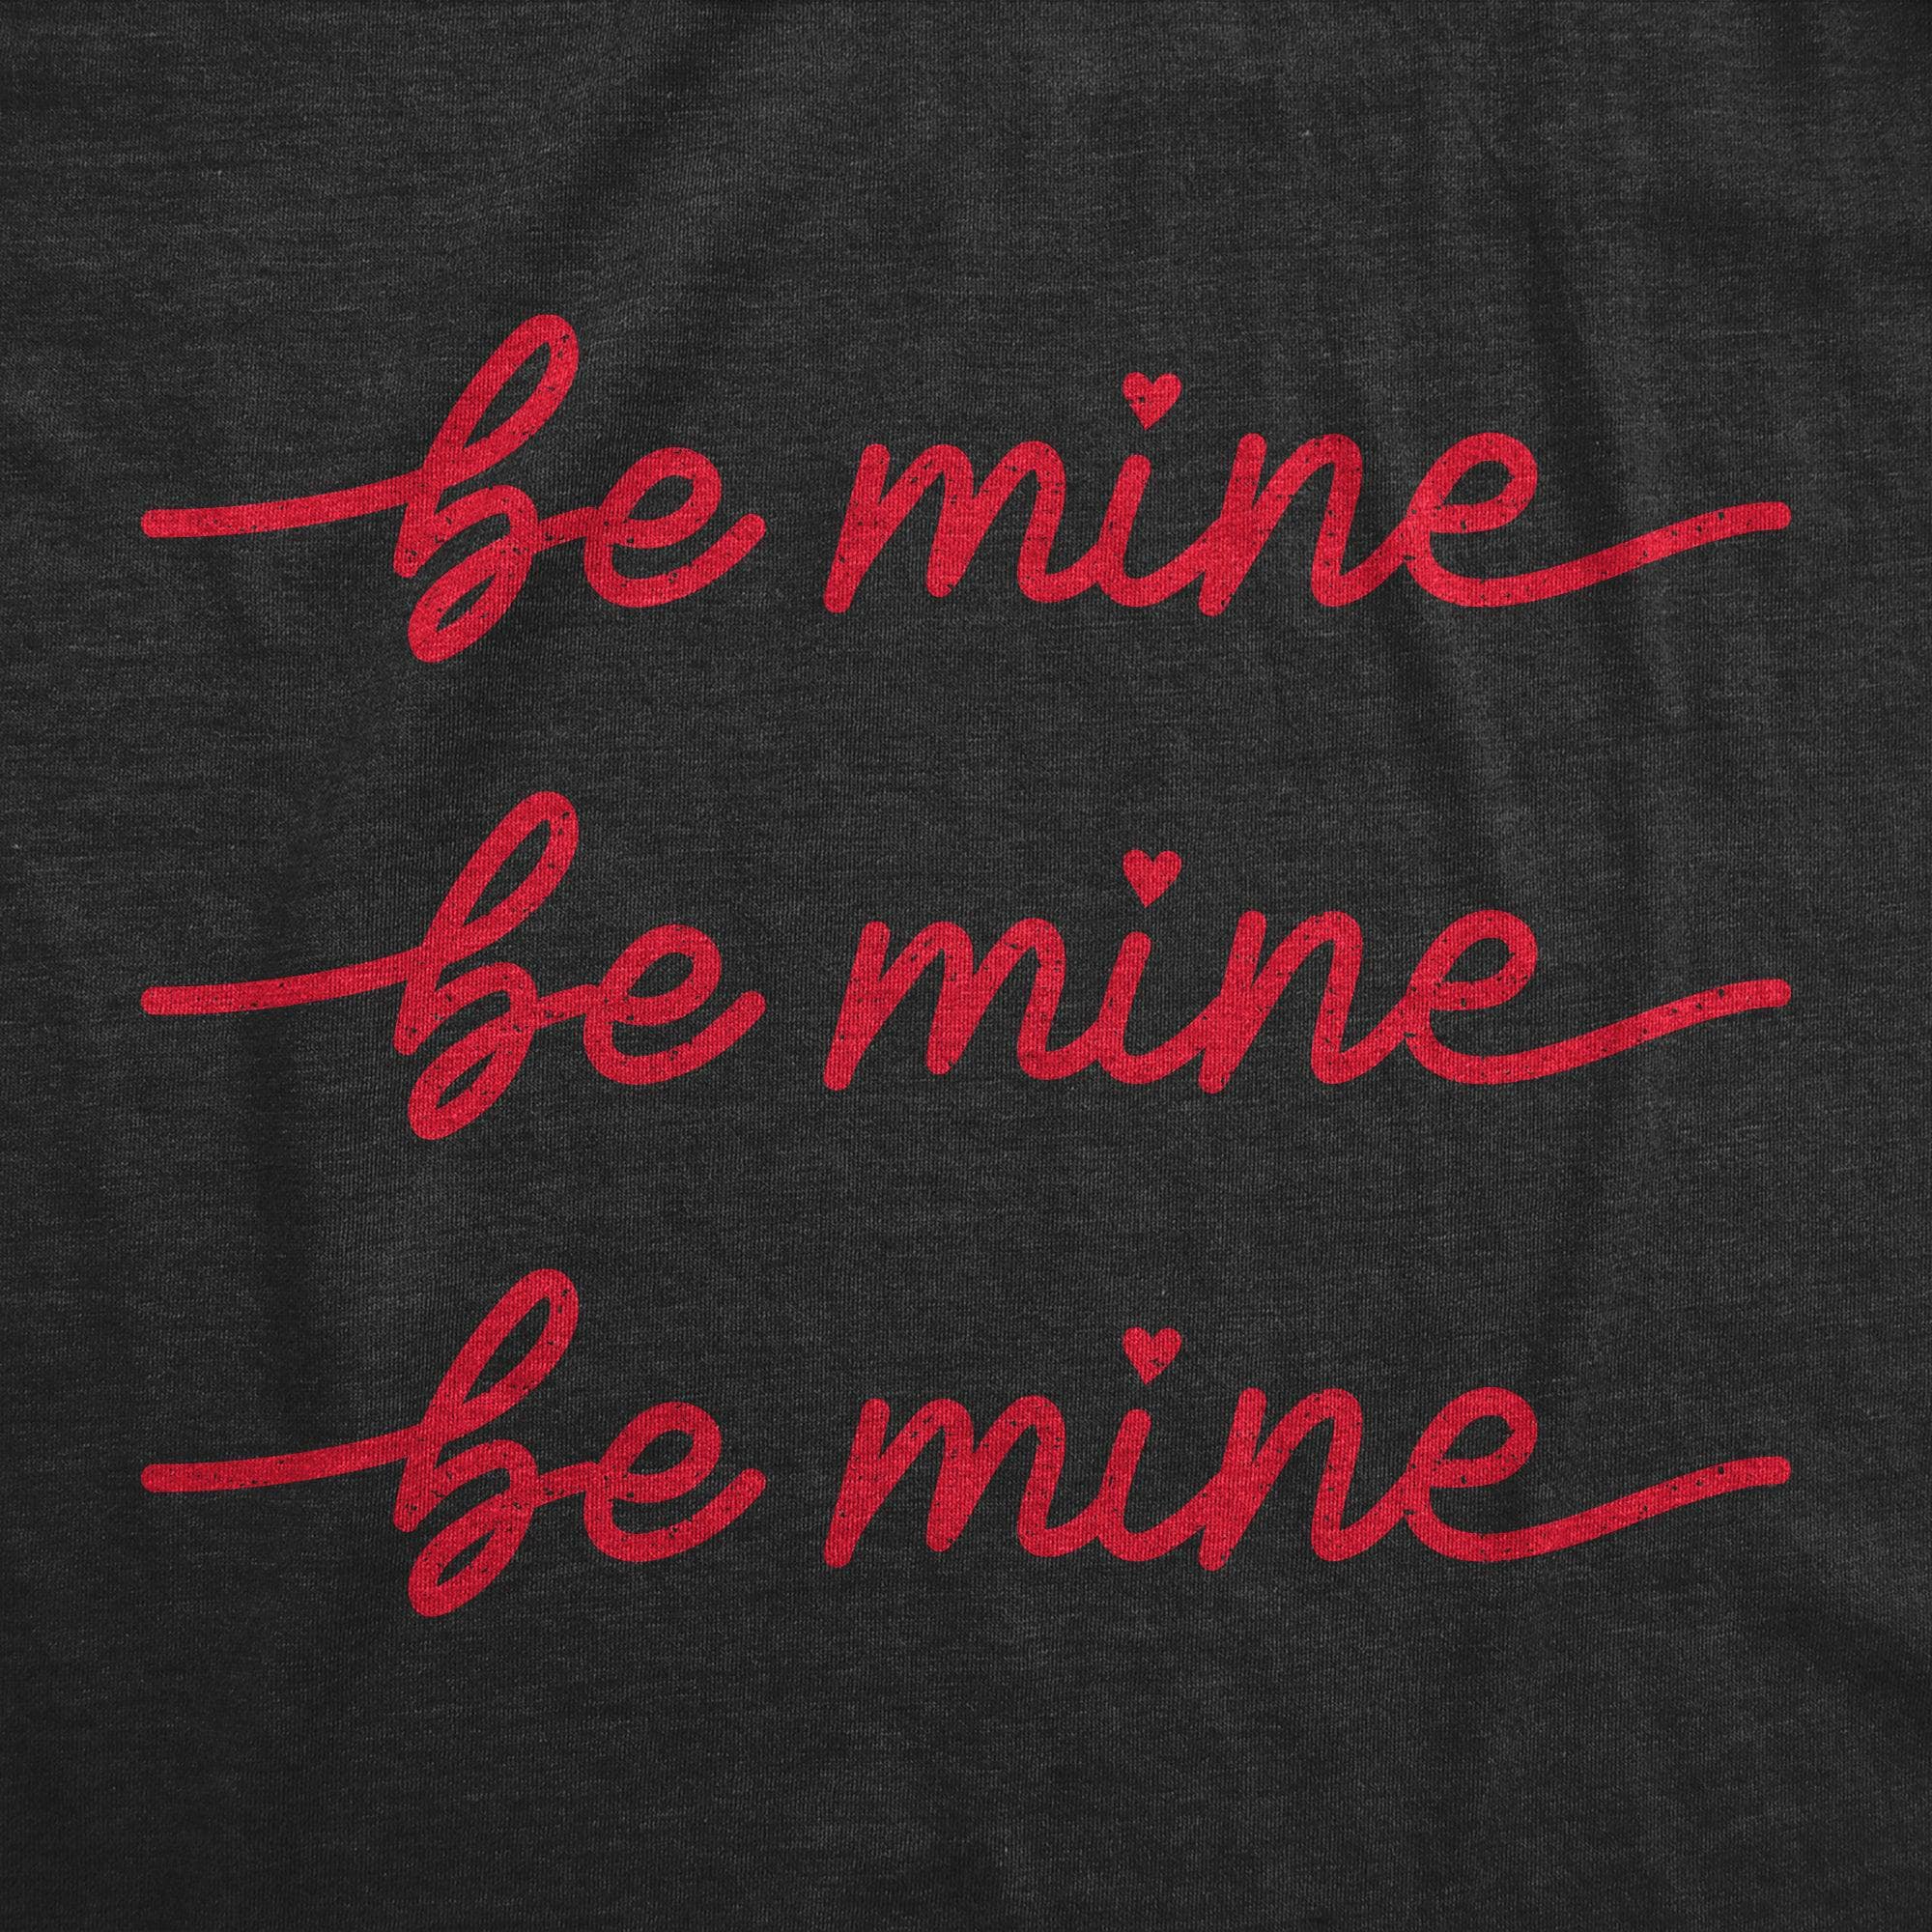 Be Mine Be Mine Be Mine Men's Tshirt  -  Crazy Dog T-Shirts